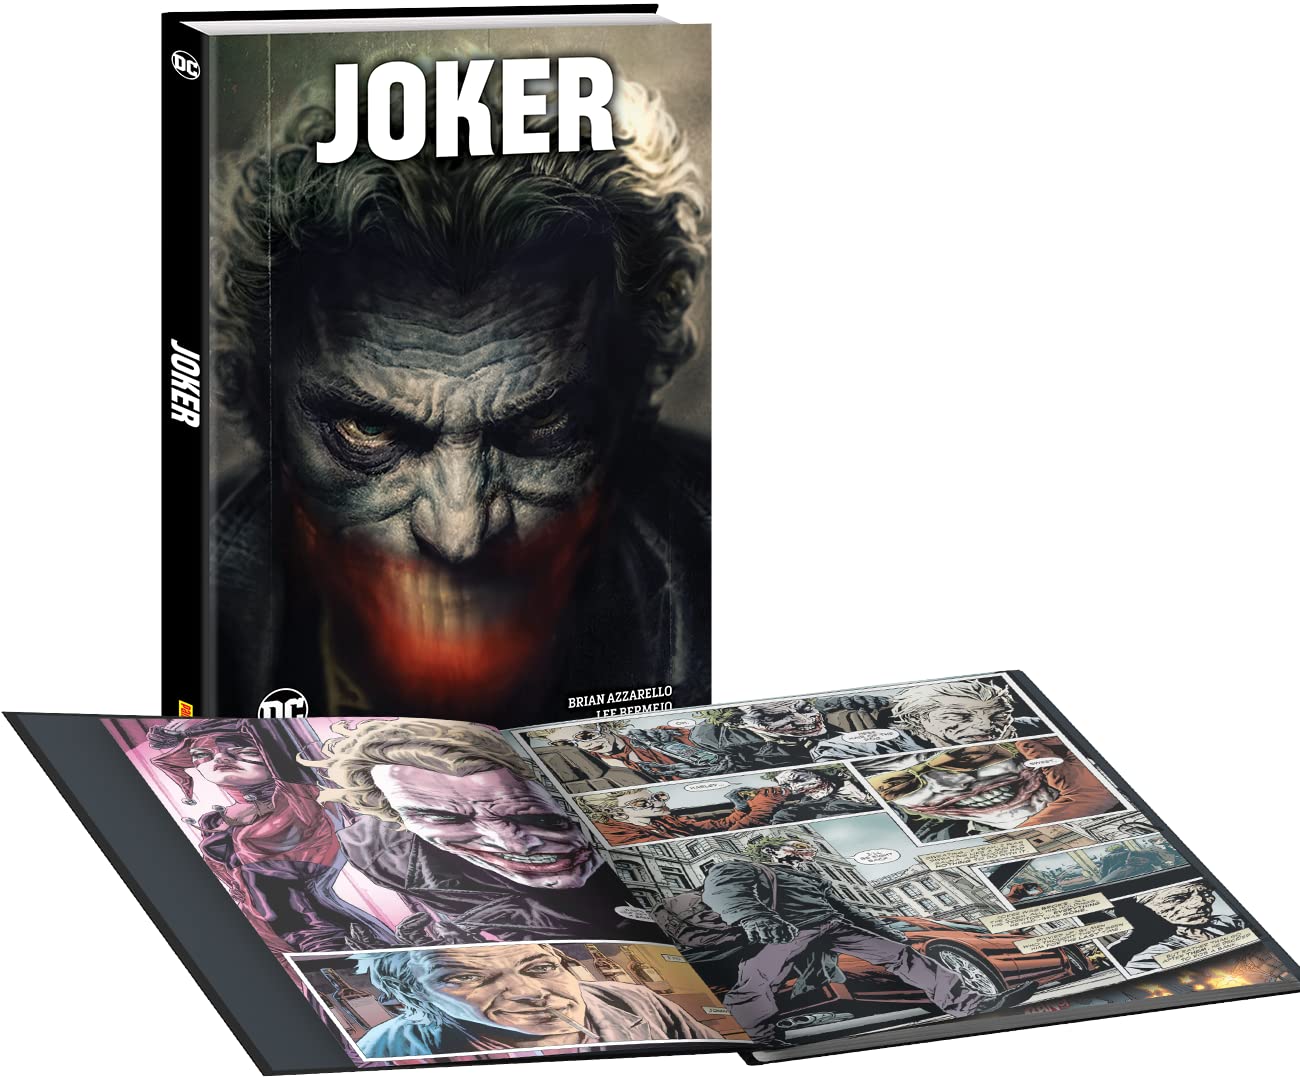 Джокер (2019) (англ. язык) (4K UHD + Blu-ray + Book + Poster) Comic Edition